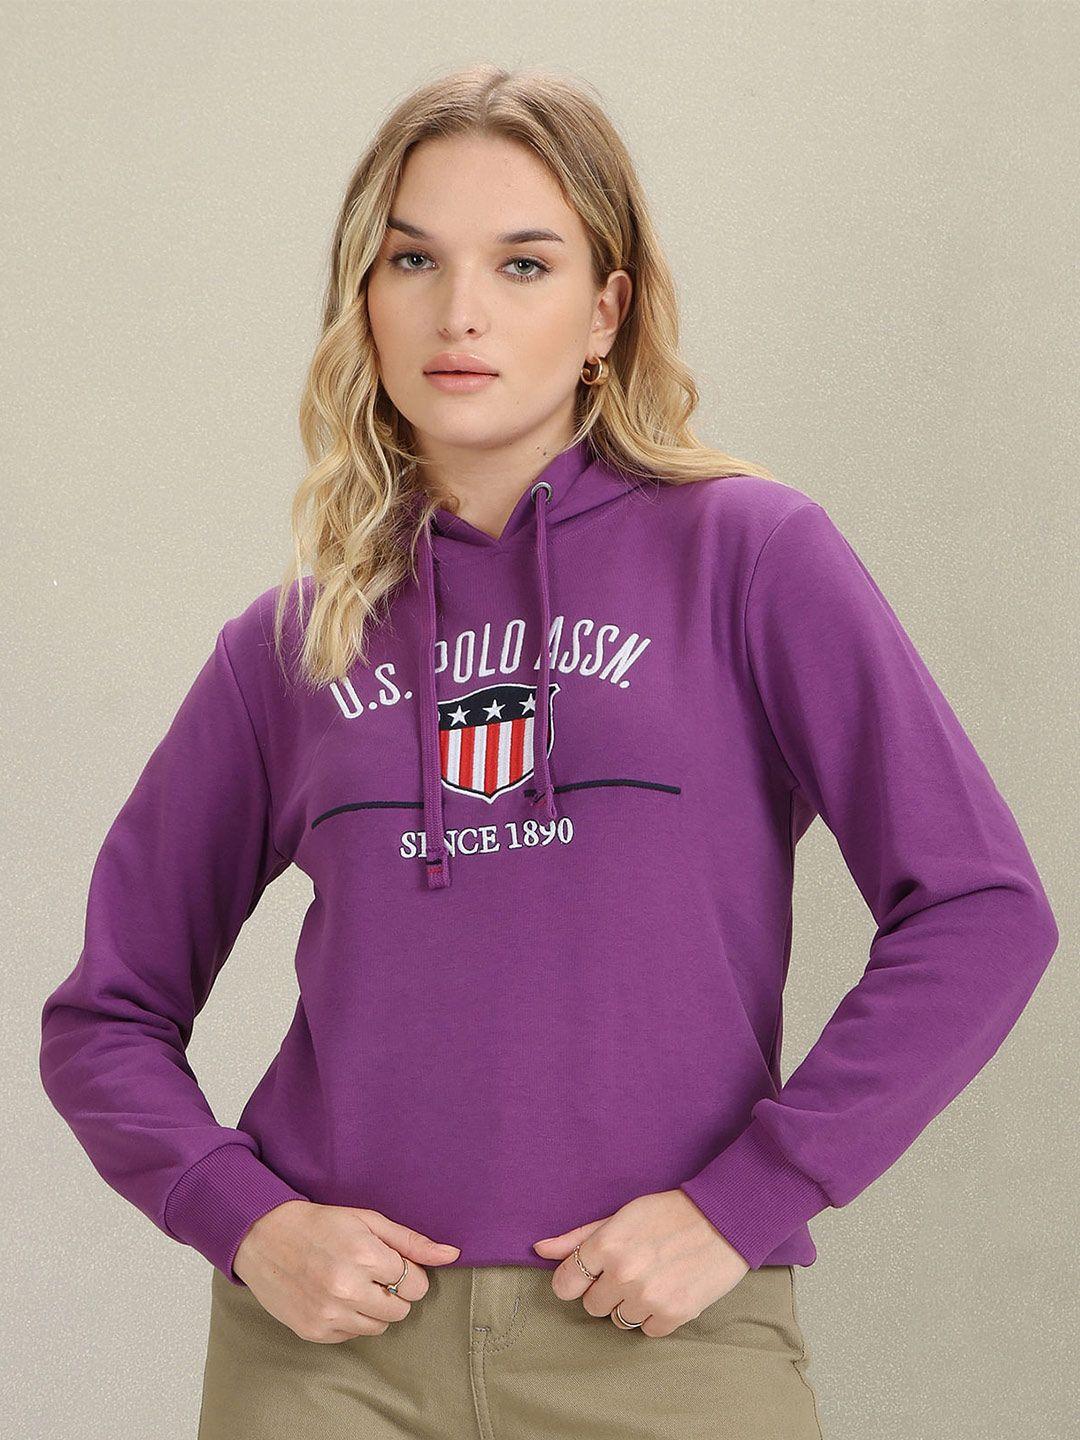 u.s. polo assn. women typography printed sweatshirt